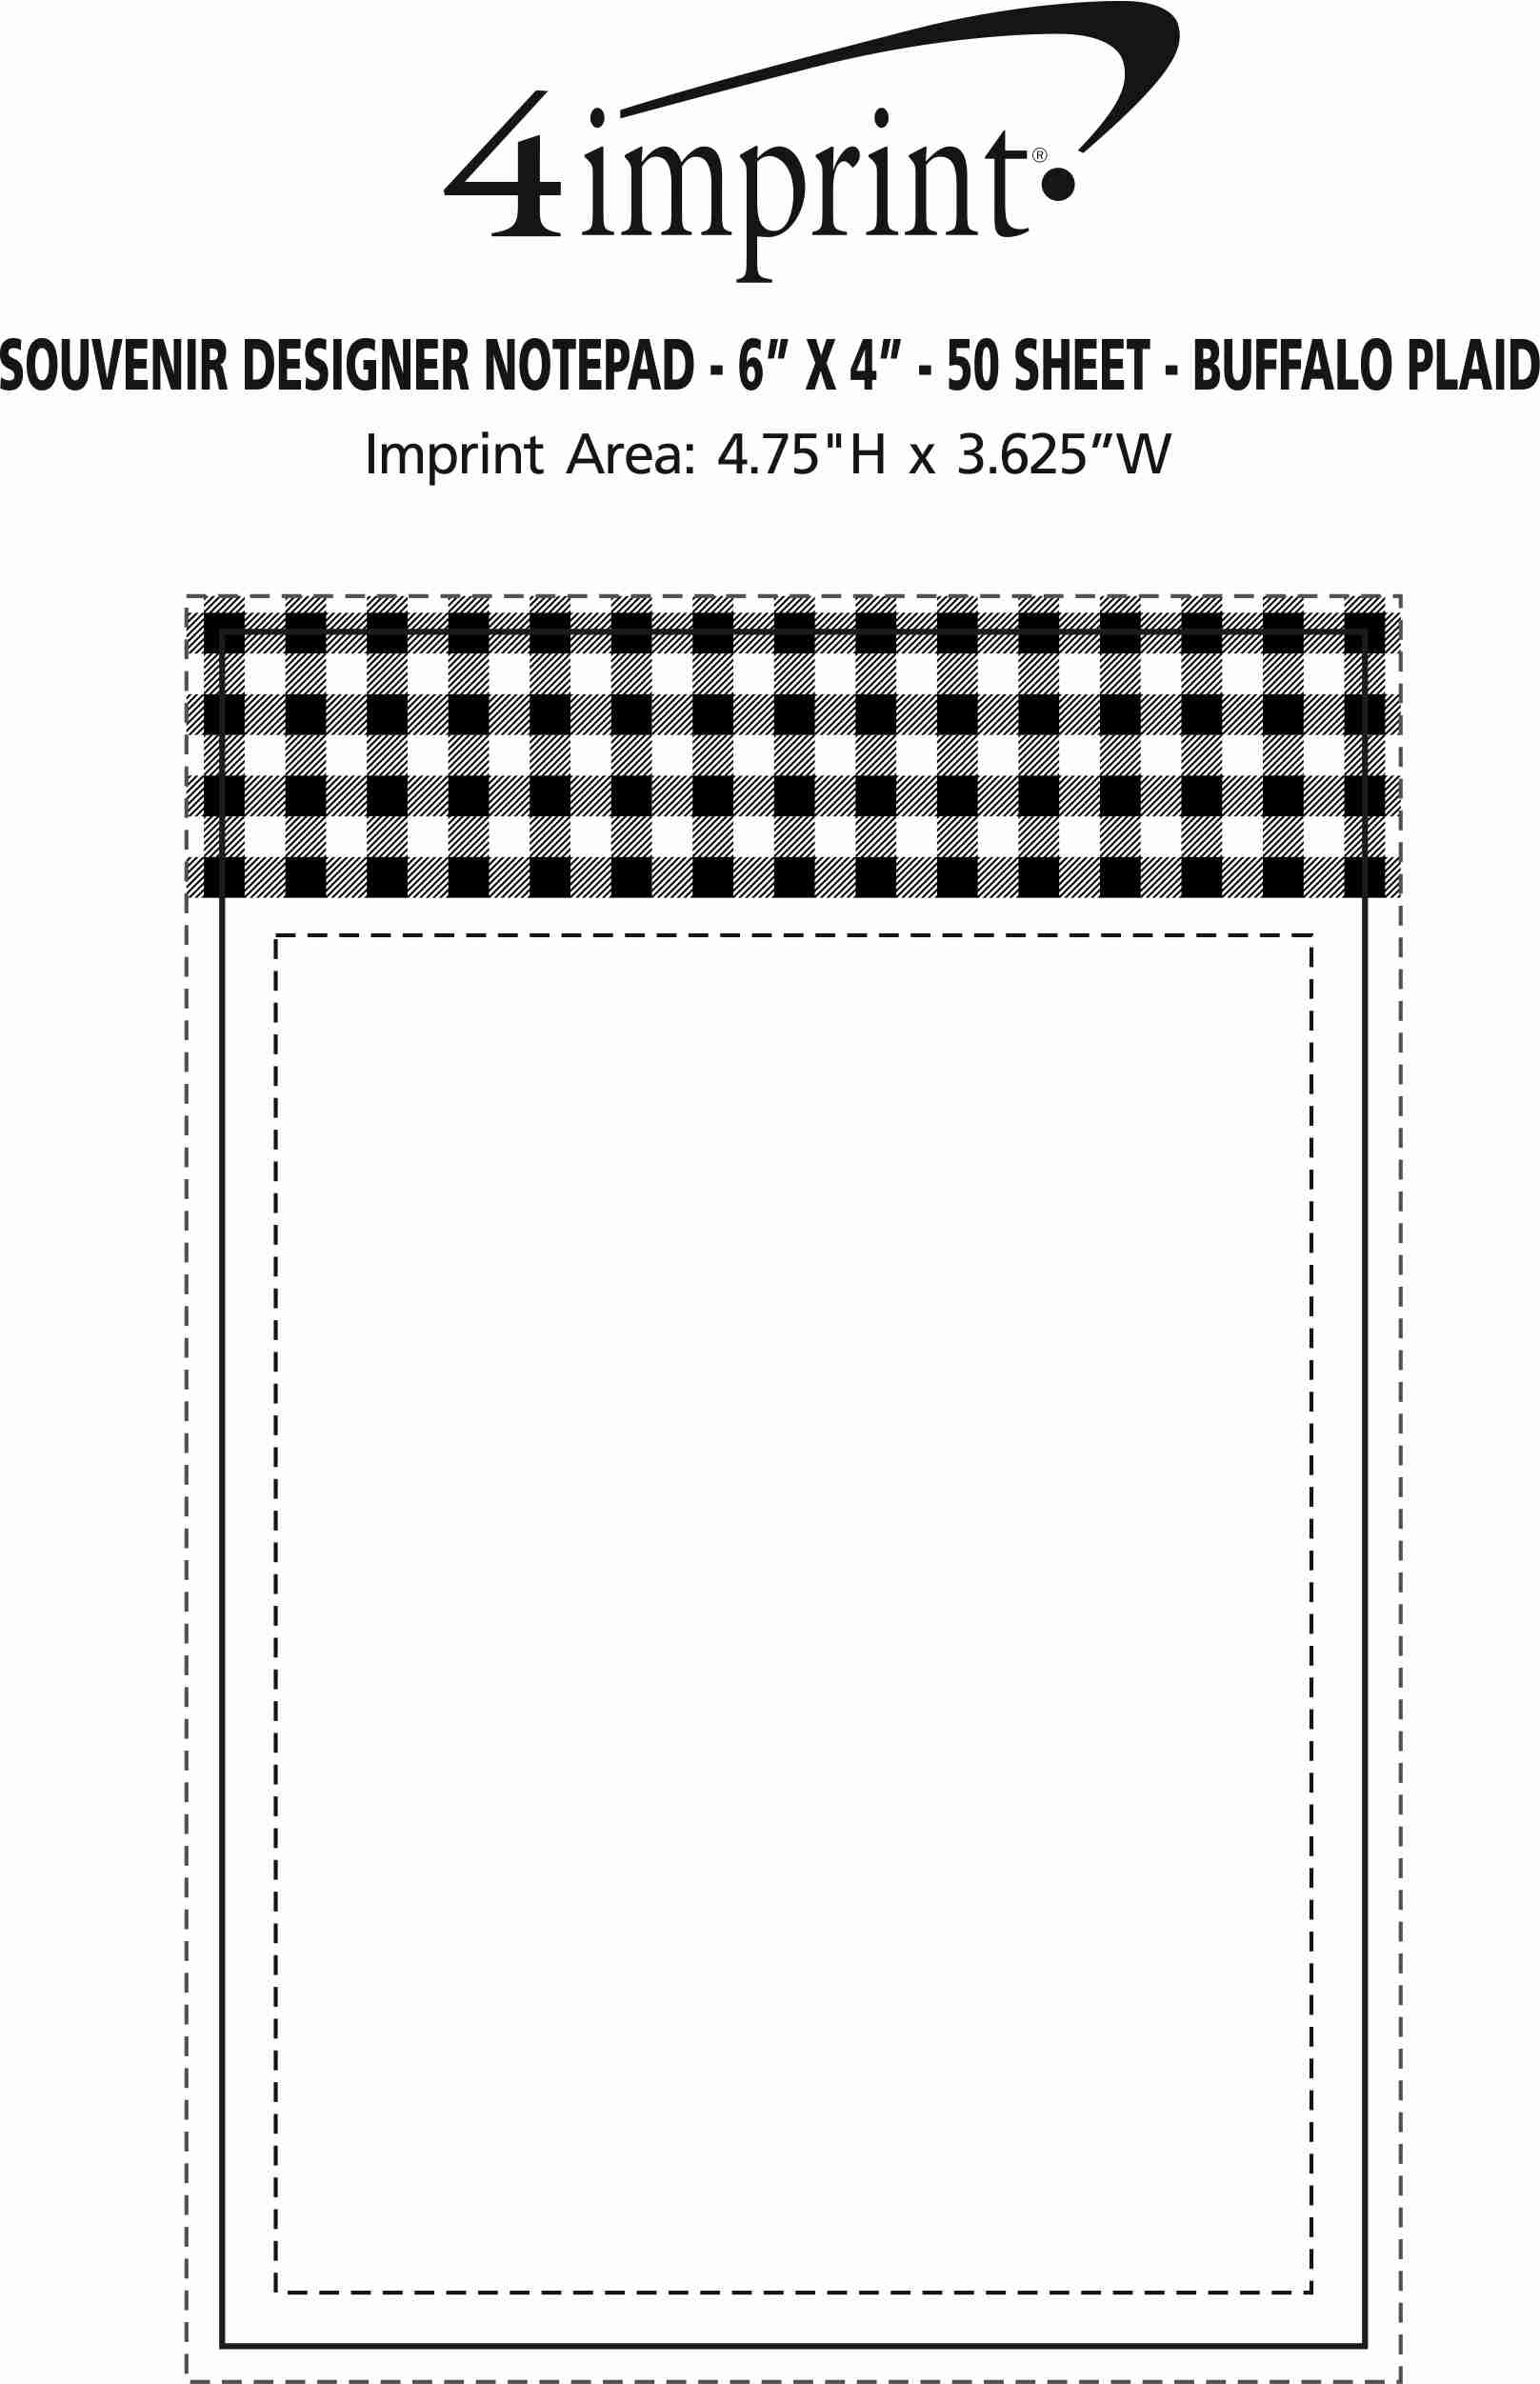 Imprint Area of Souvenir Designer Notepad - 6” x 4” - 50 Sheet - Buffalo Plaid